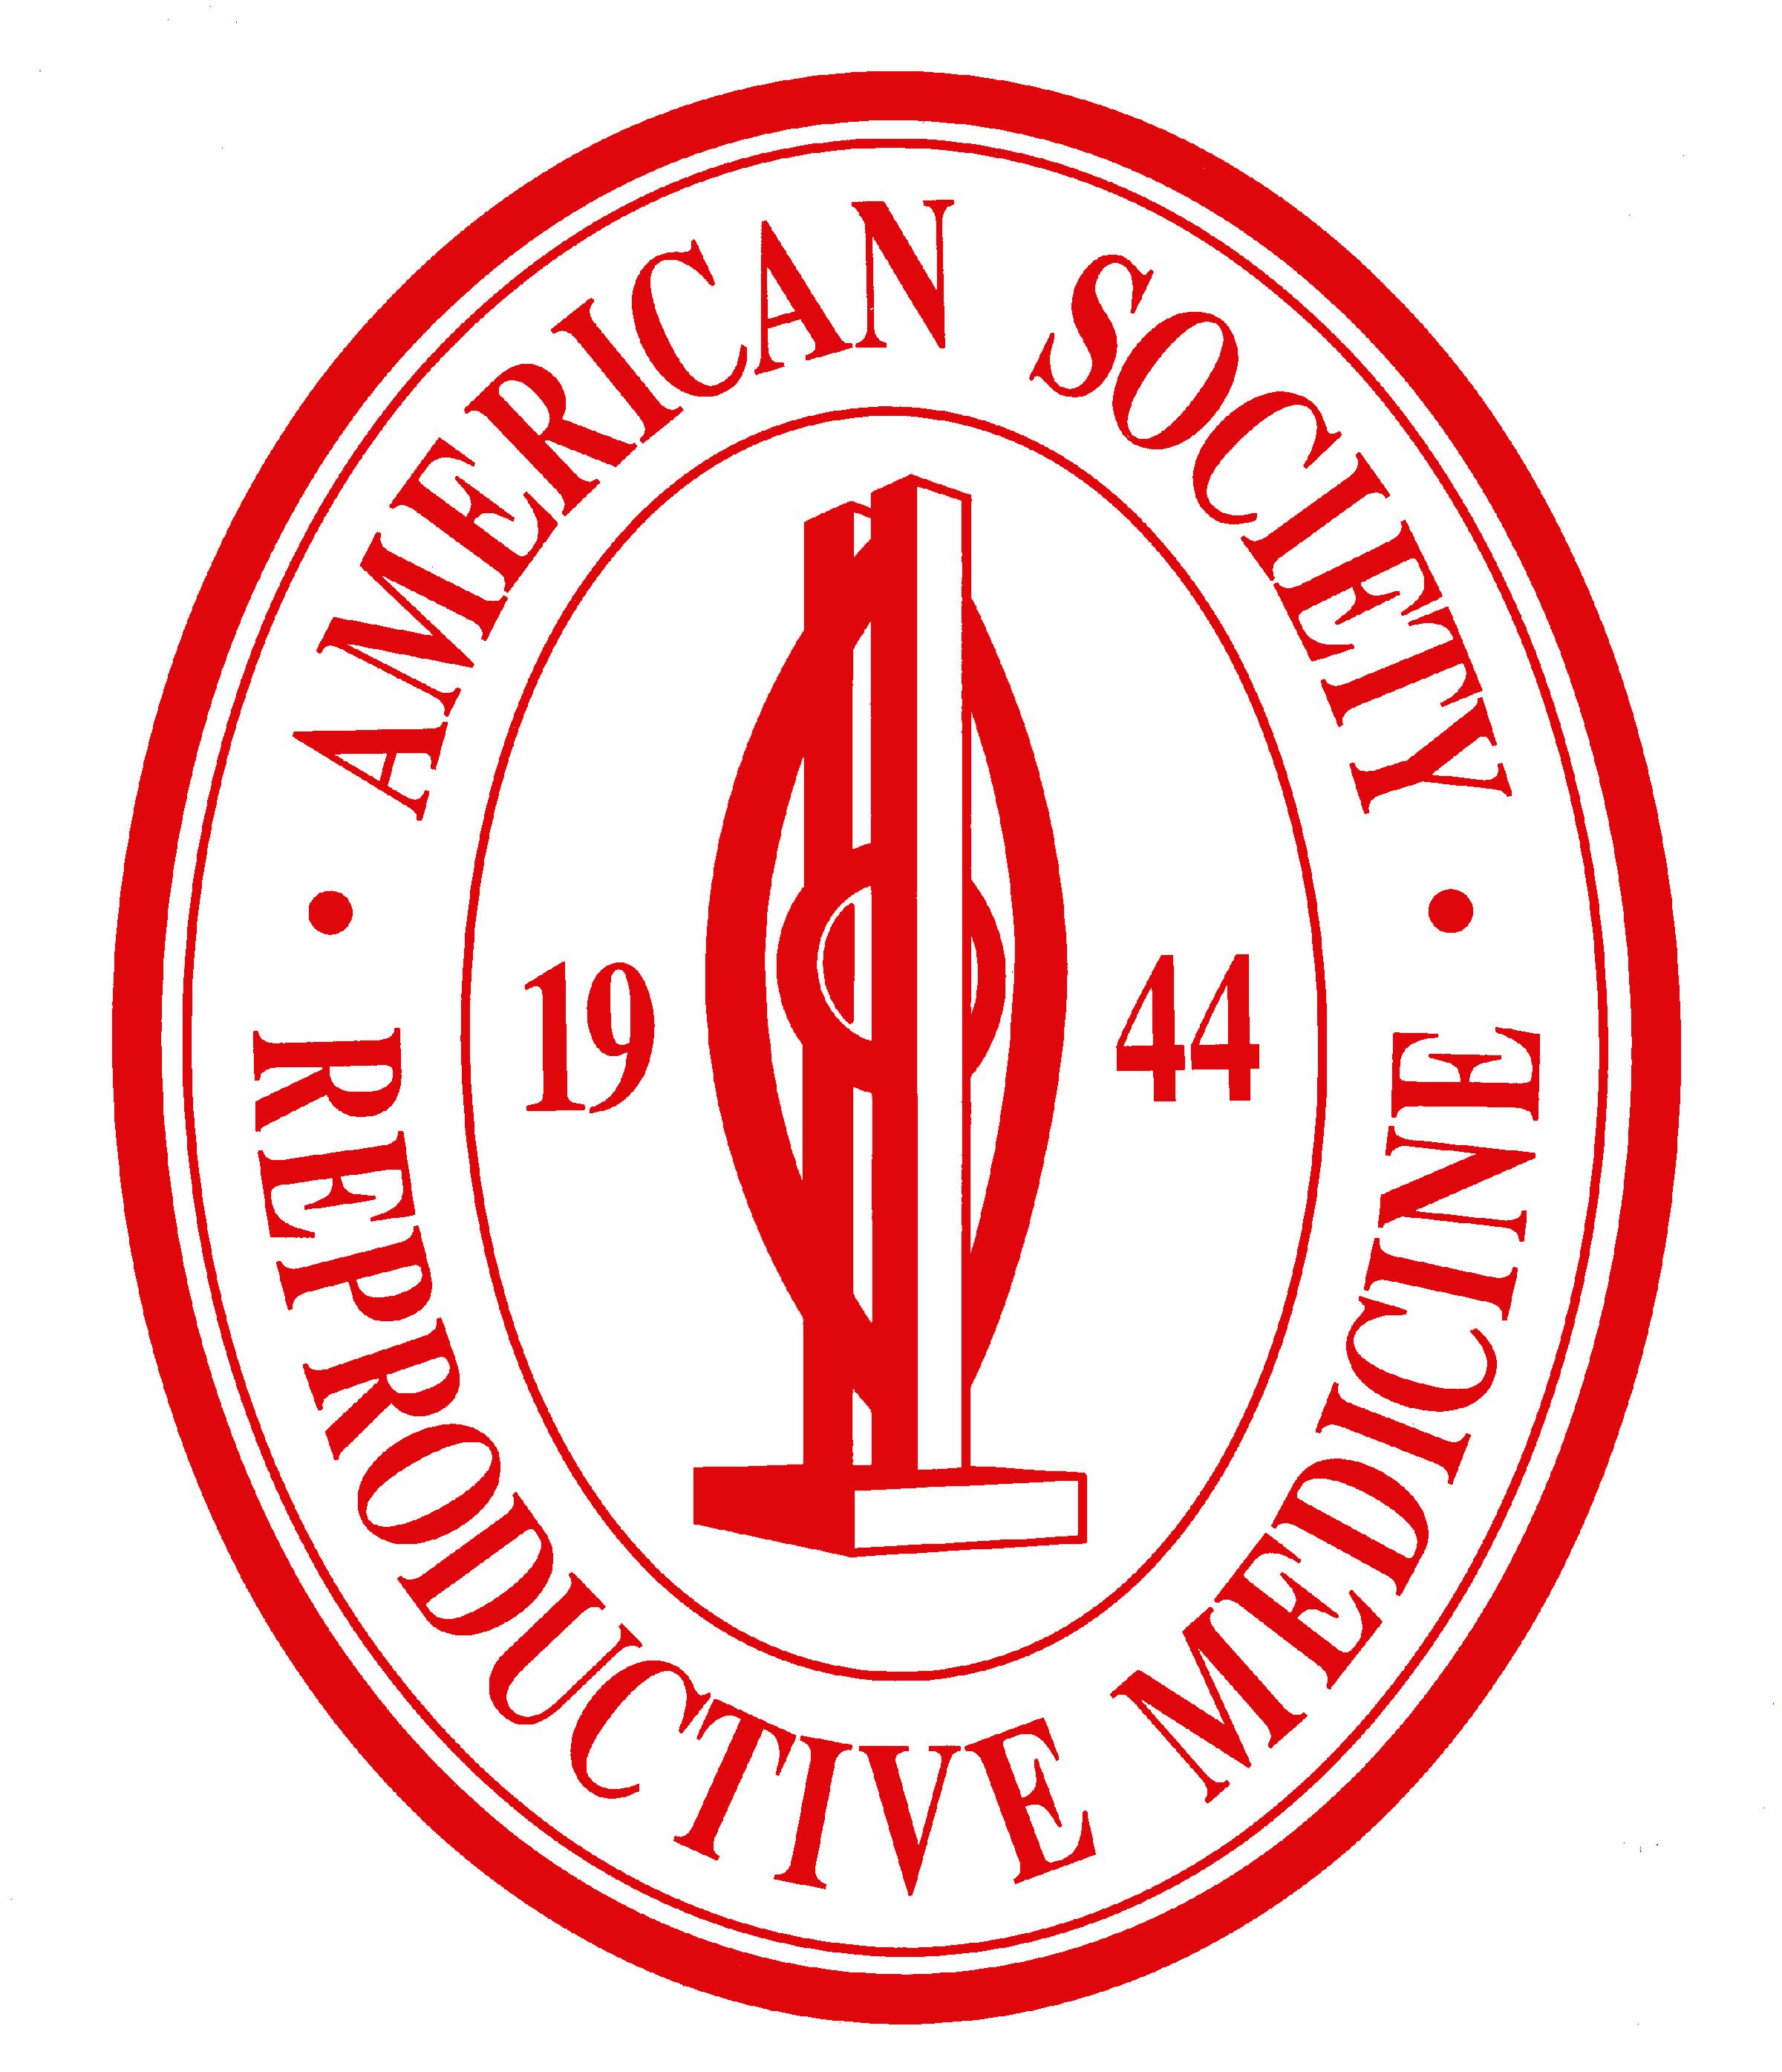 ASRM 2018 - Scientific Congress & Expo of The American Society for Reproductive Medicine